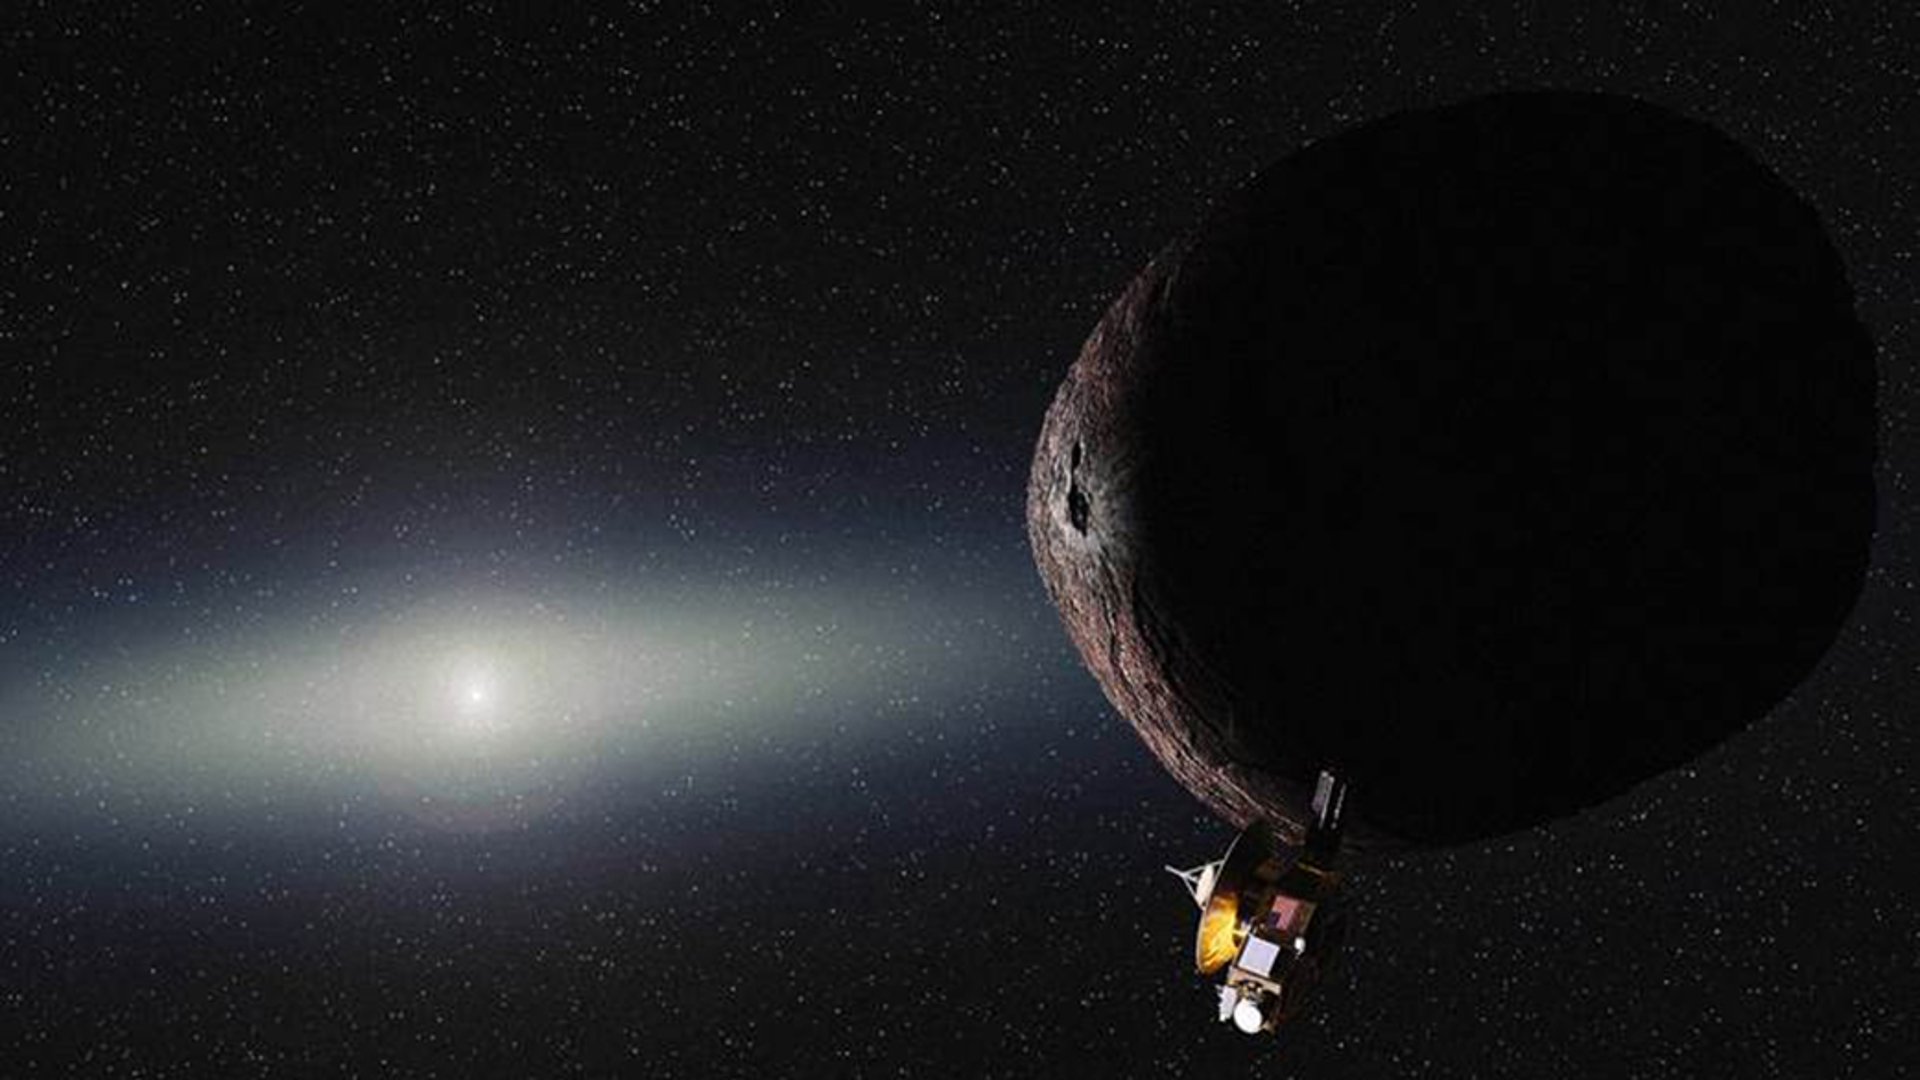 NASA - New Horizons - Pluto Probe